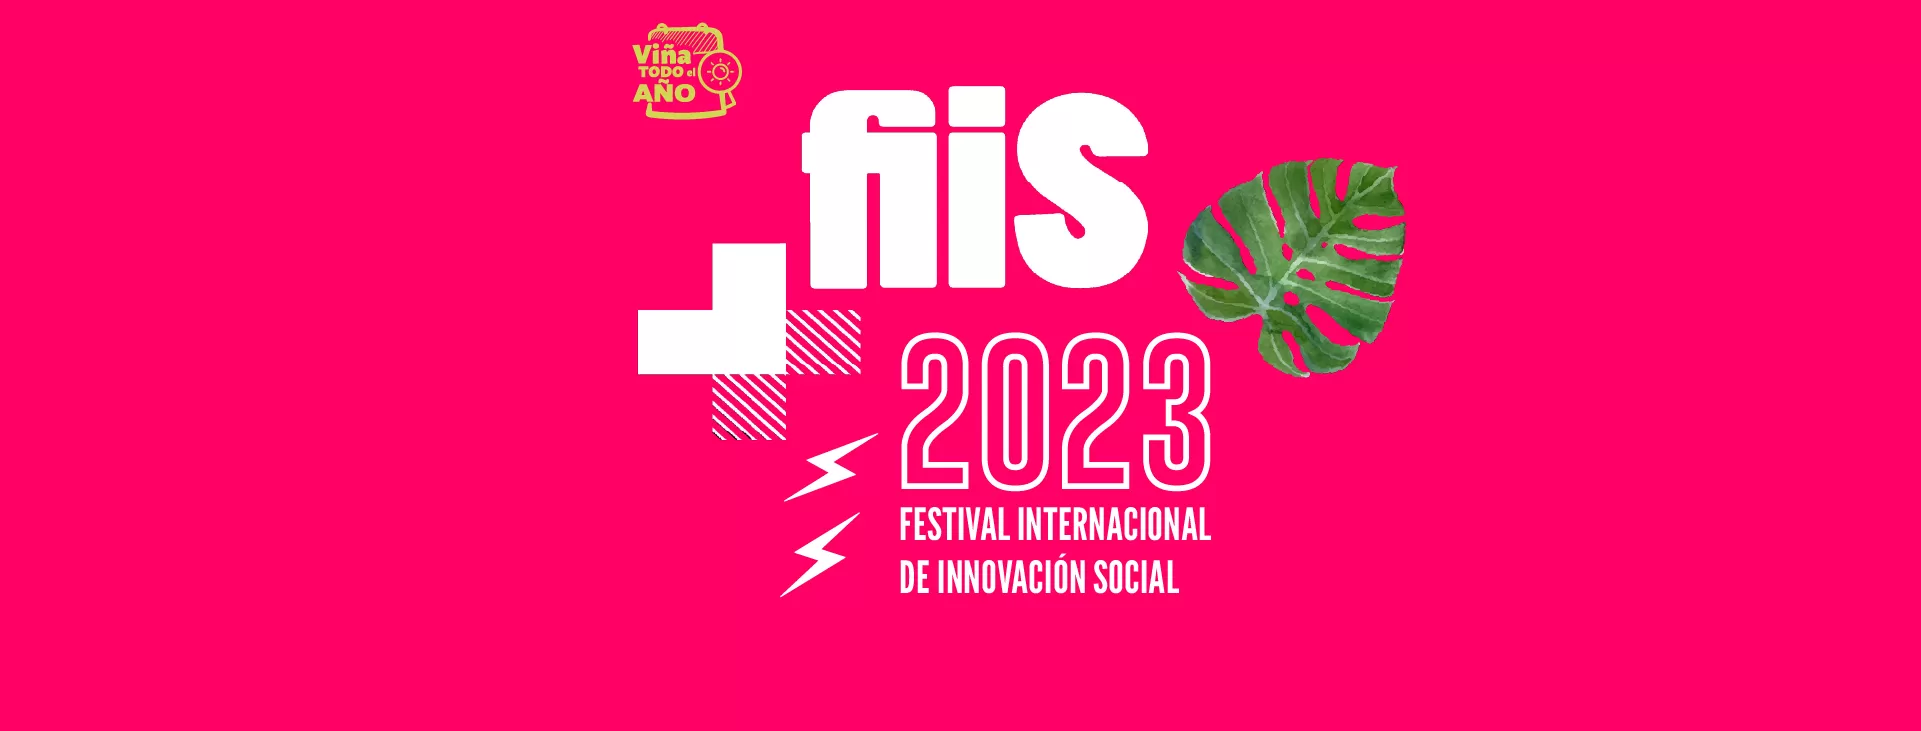 Festival Internacional de Innovacion Social